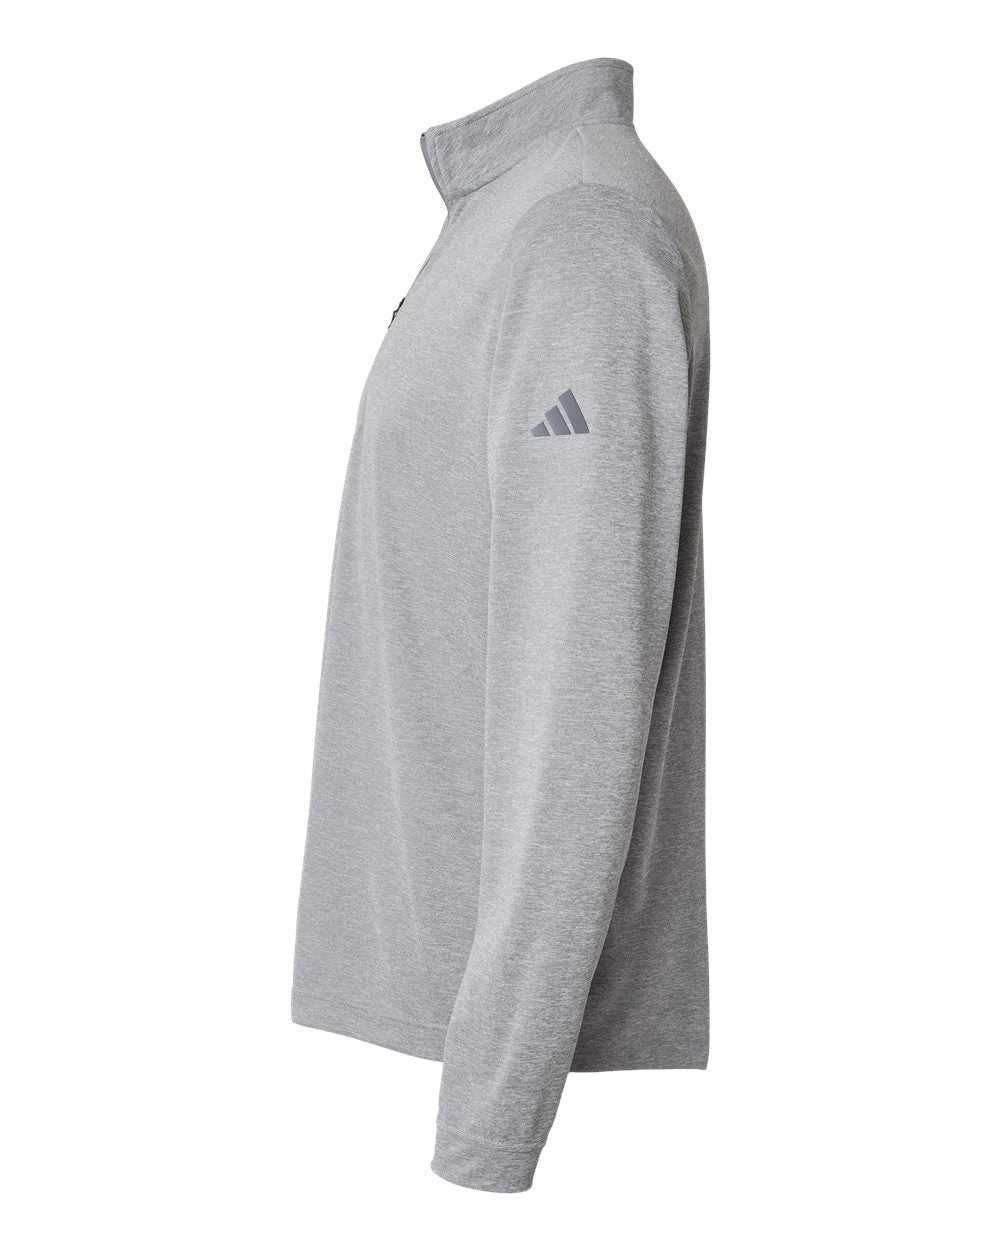 Adidas A401 Lightweight Quarter-Zip Pullover - Gray Three Melange - HIT a Double - 1